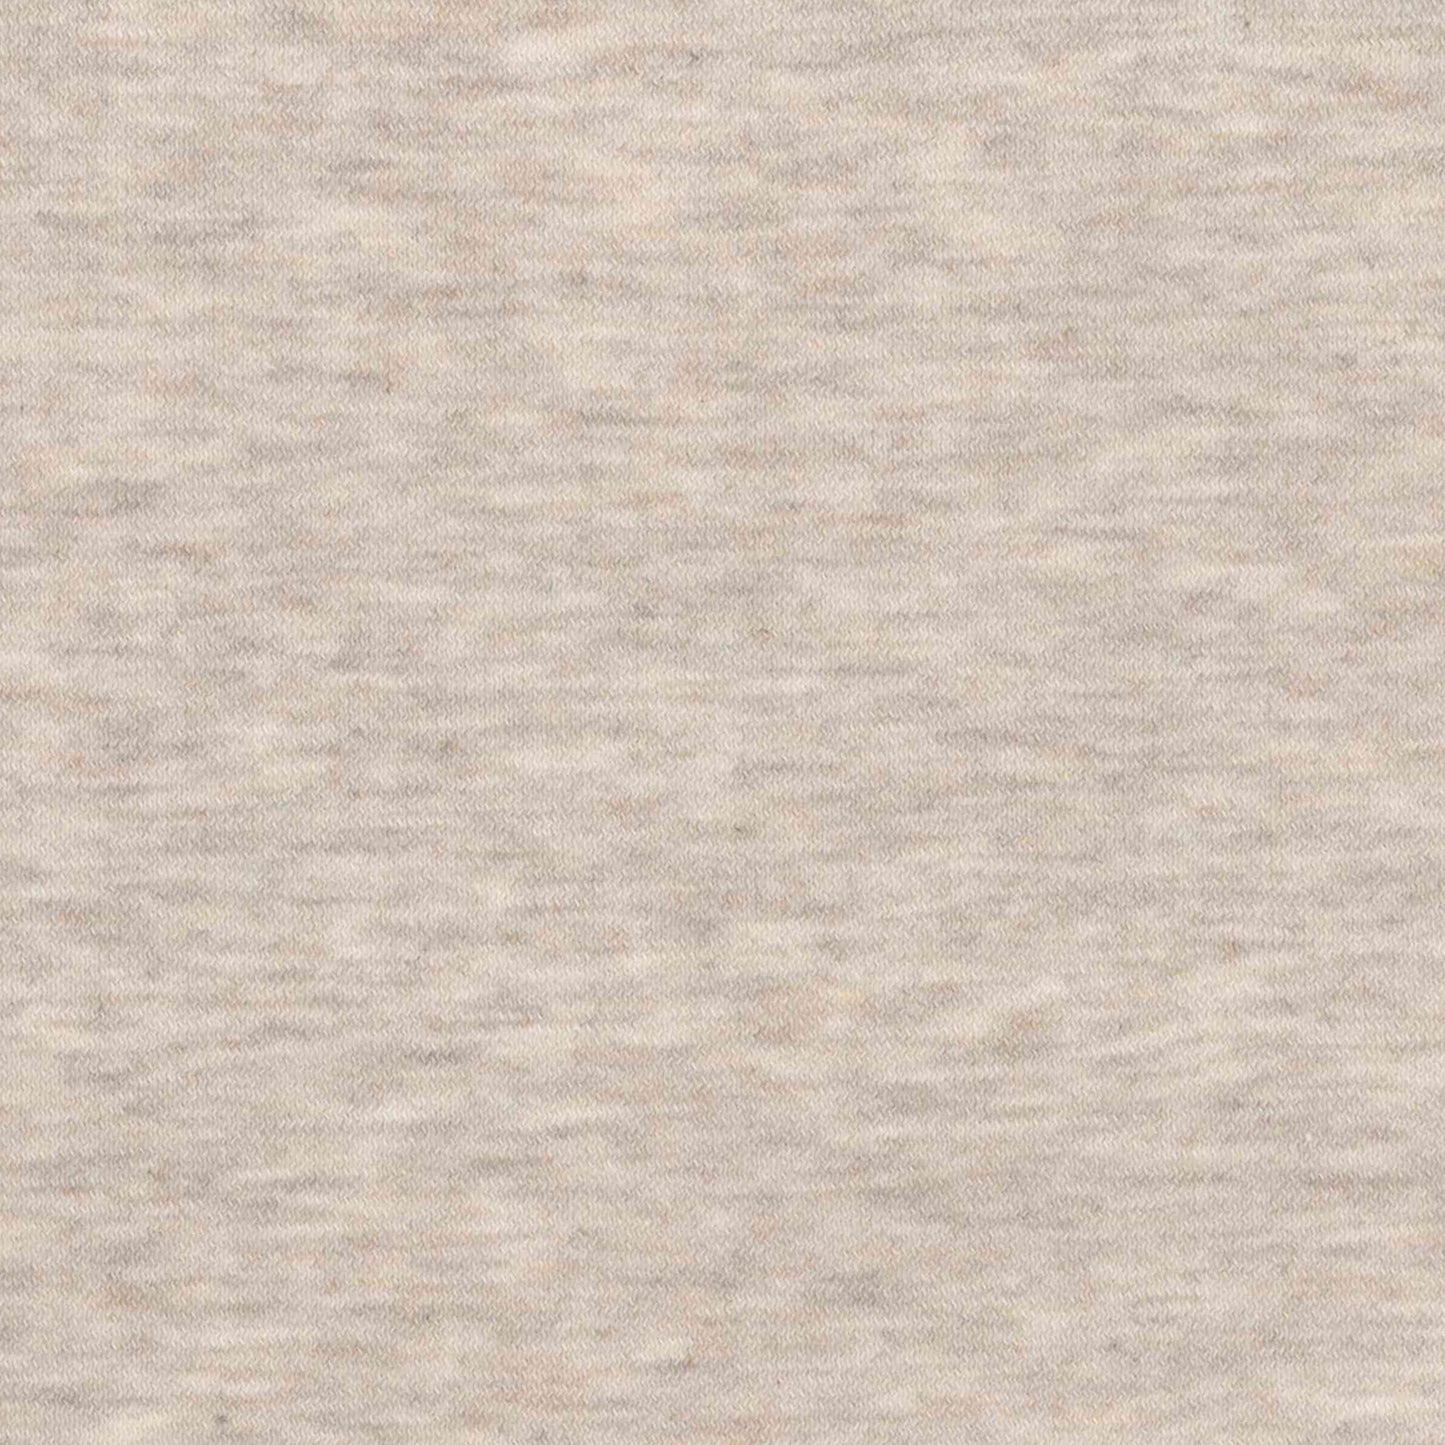 100% Organic Cotton Single Jersey - Beige Melange (2SP240)